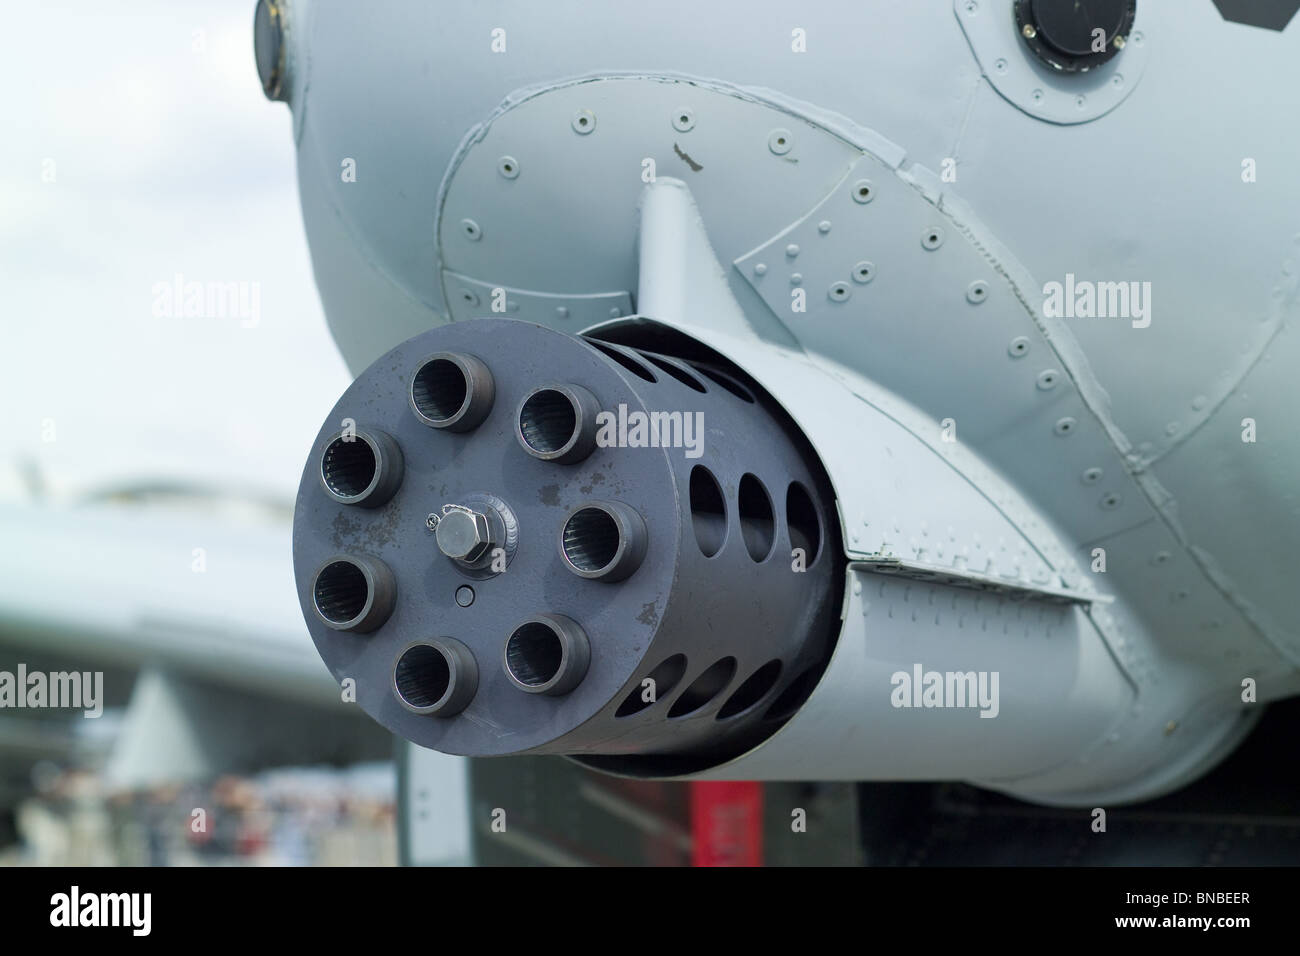 Gatling gun of the A-10 Thunderbolt II Warthog, detail view Stock Photo